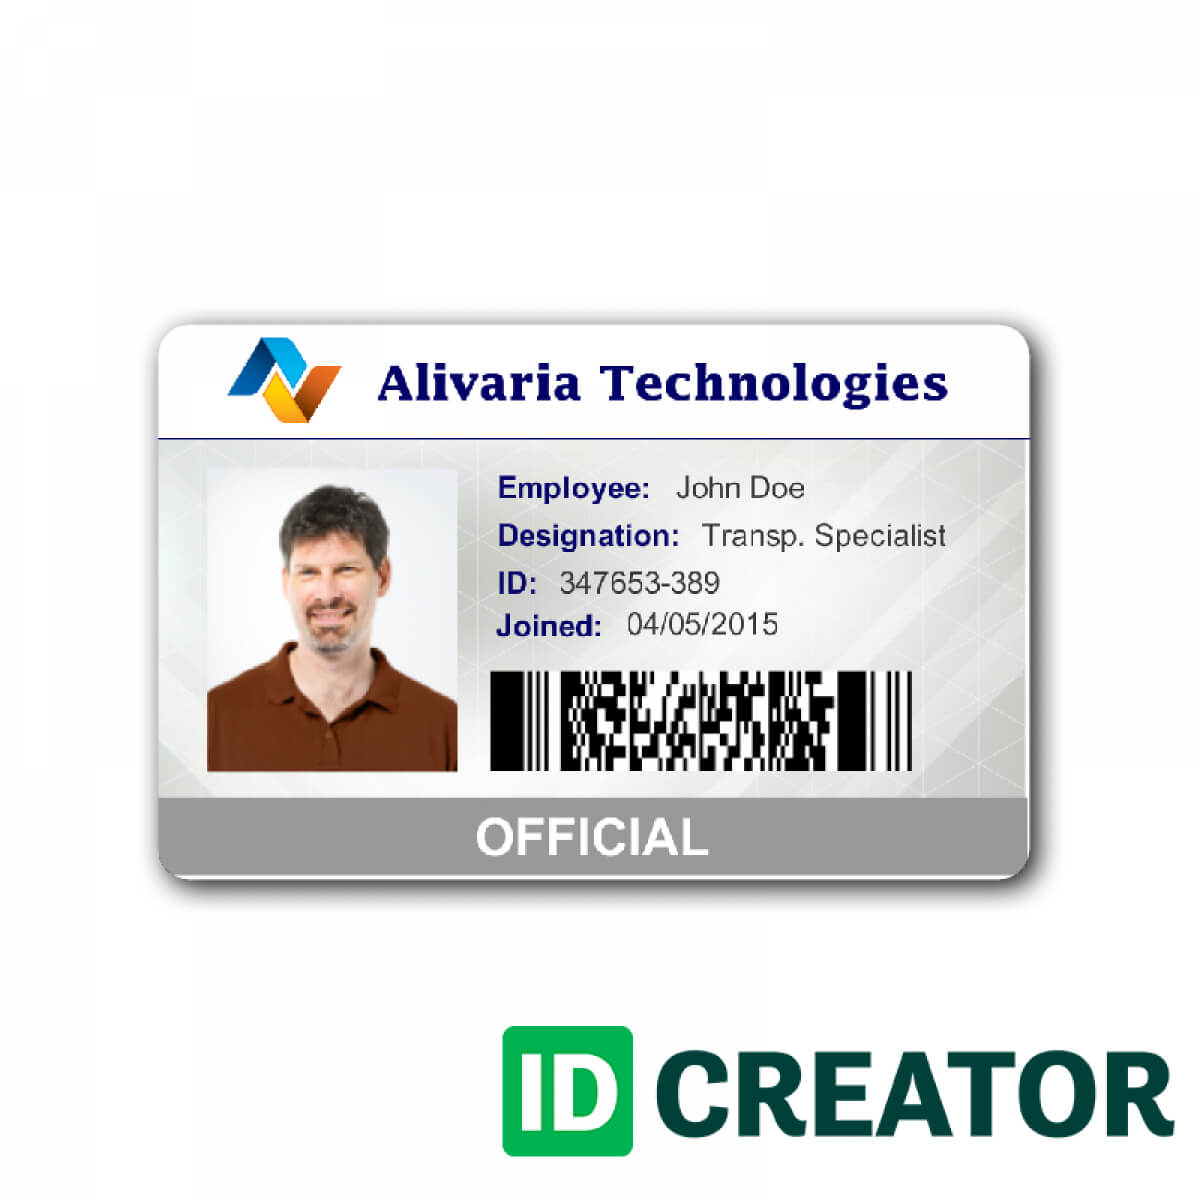 Employee id card design template free download - equipmentdsa